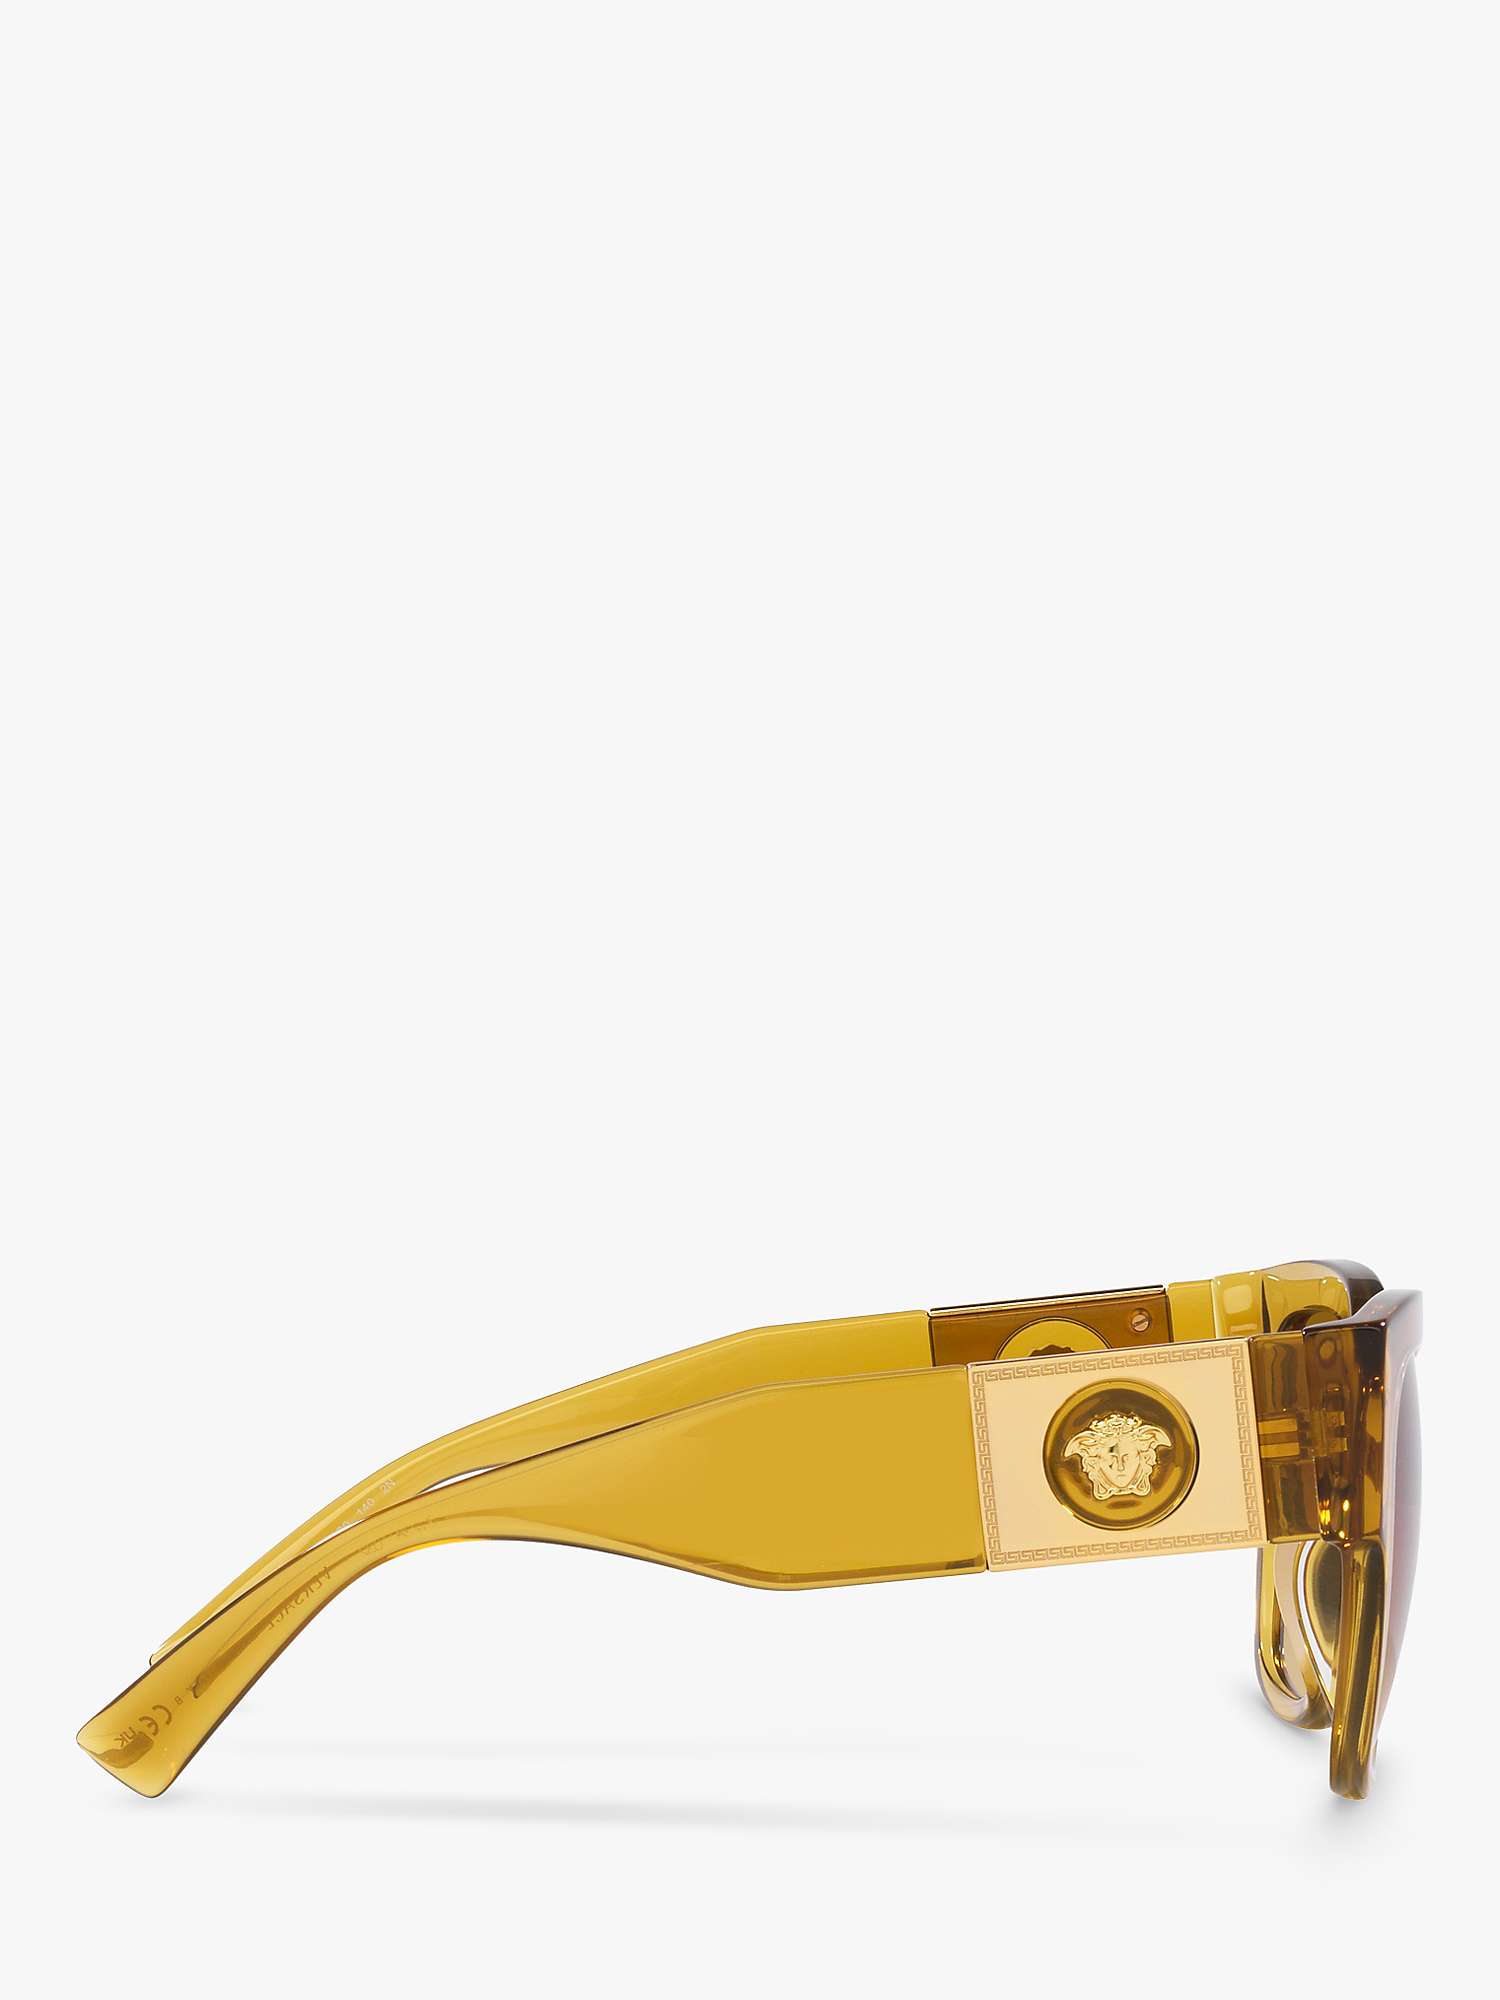 Buy Versace VE4437U Women's Pillow Sunglasses, Transparent Honey/Brown Gradient Online at johnlewis.com